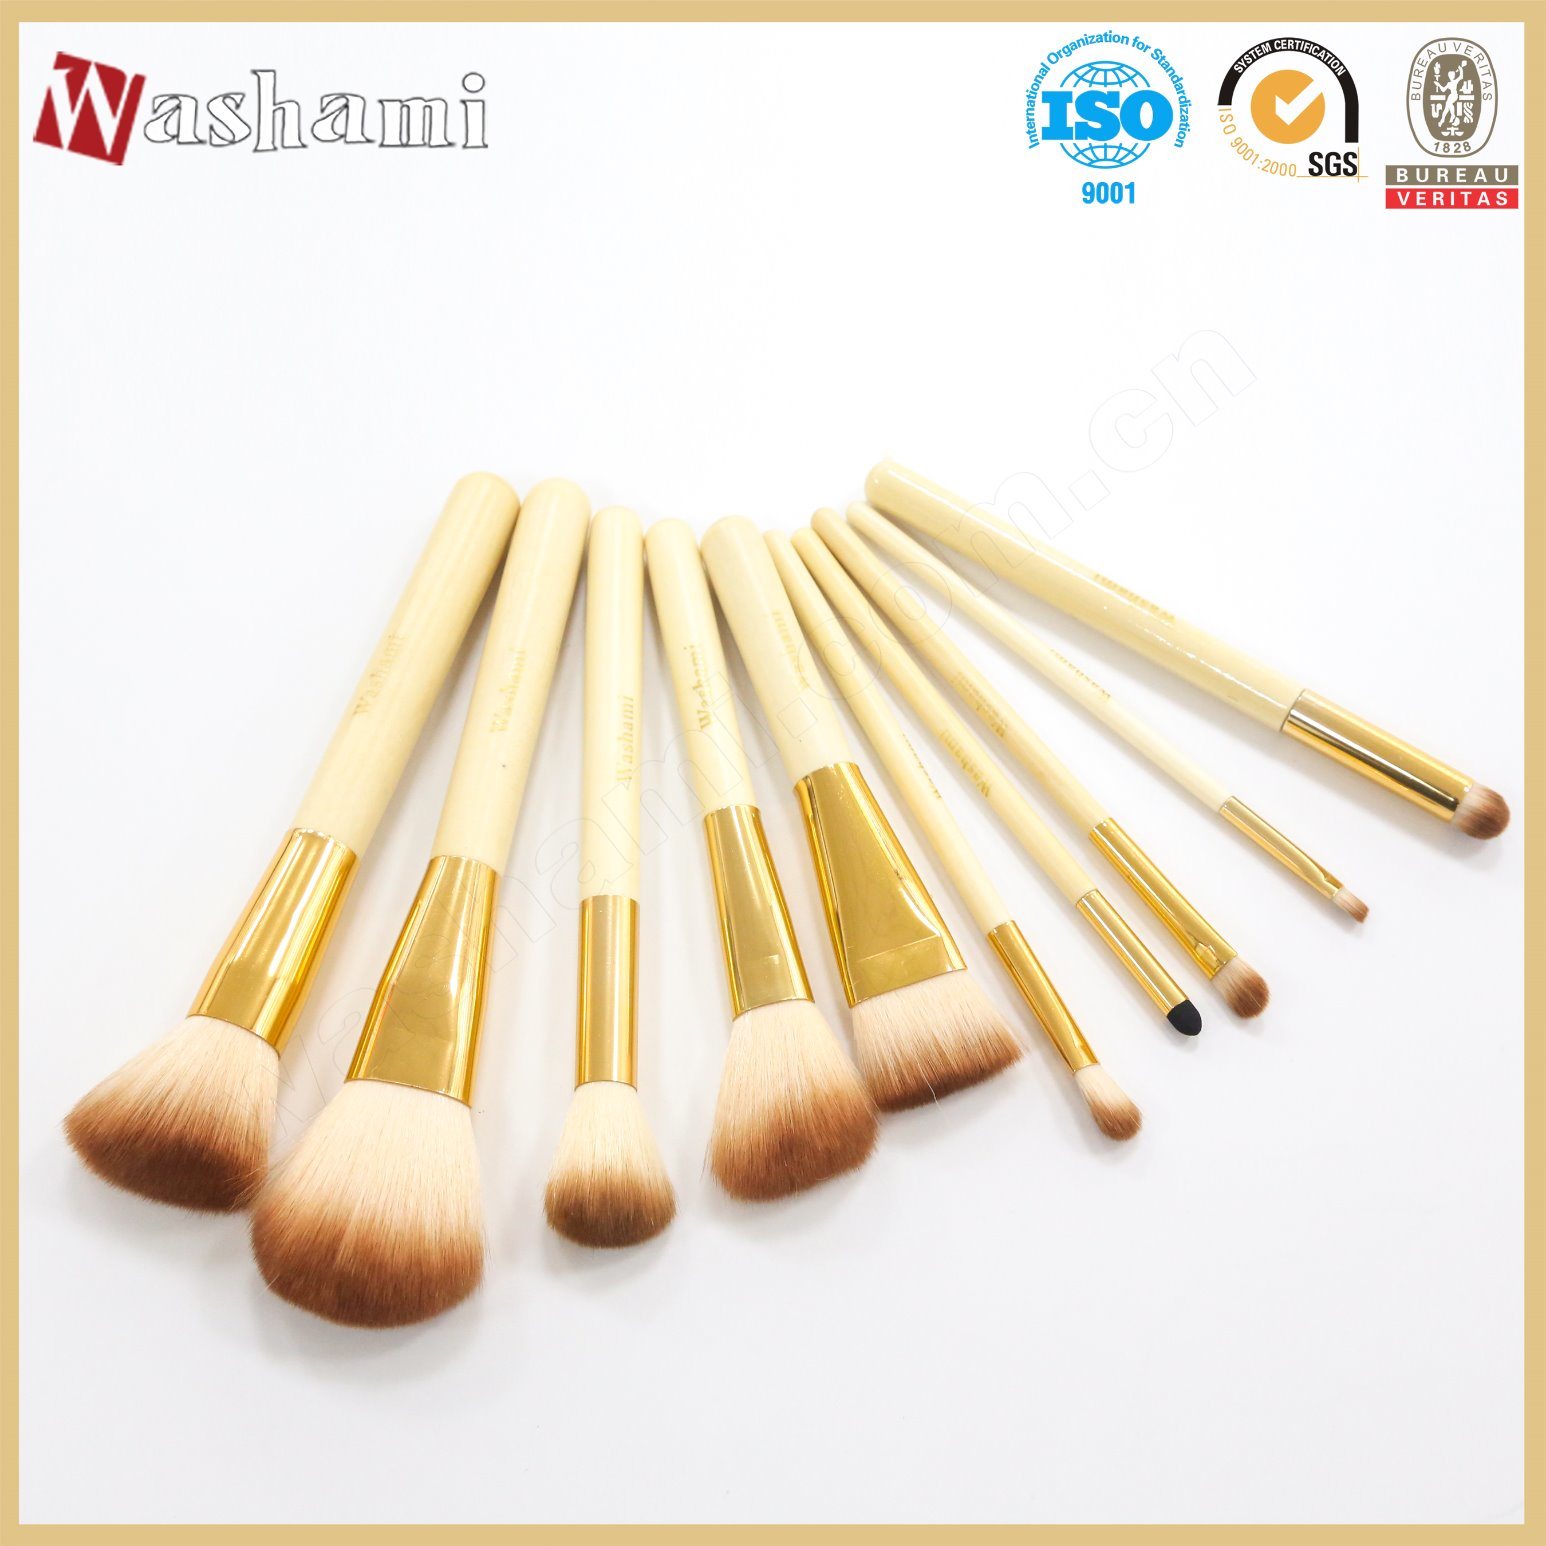 Washami Top Quality Makeup Brush Kit 10PCS Cosmetic Brush Set